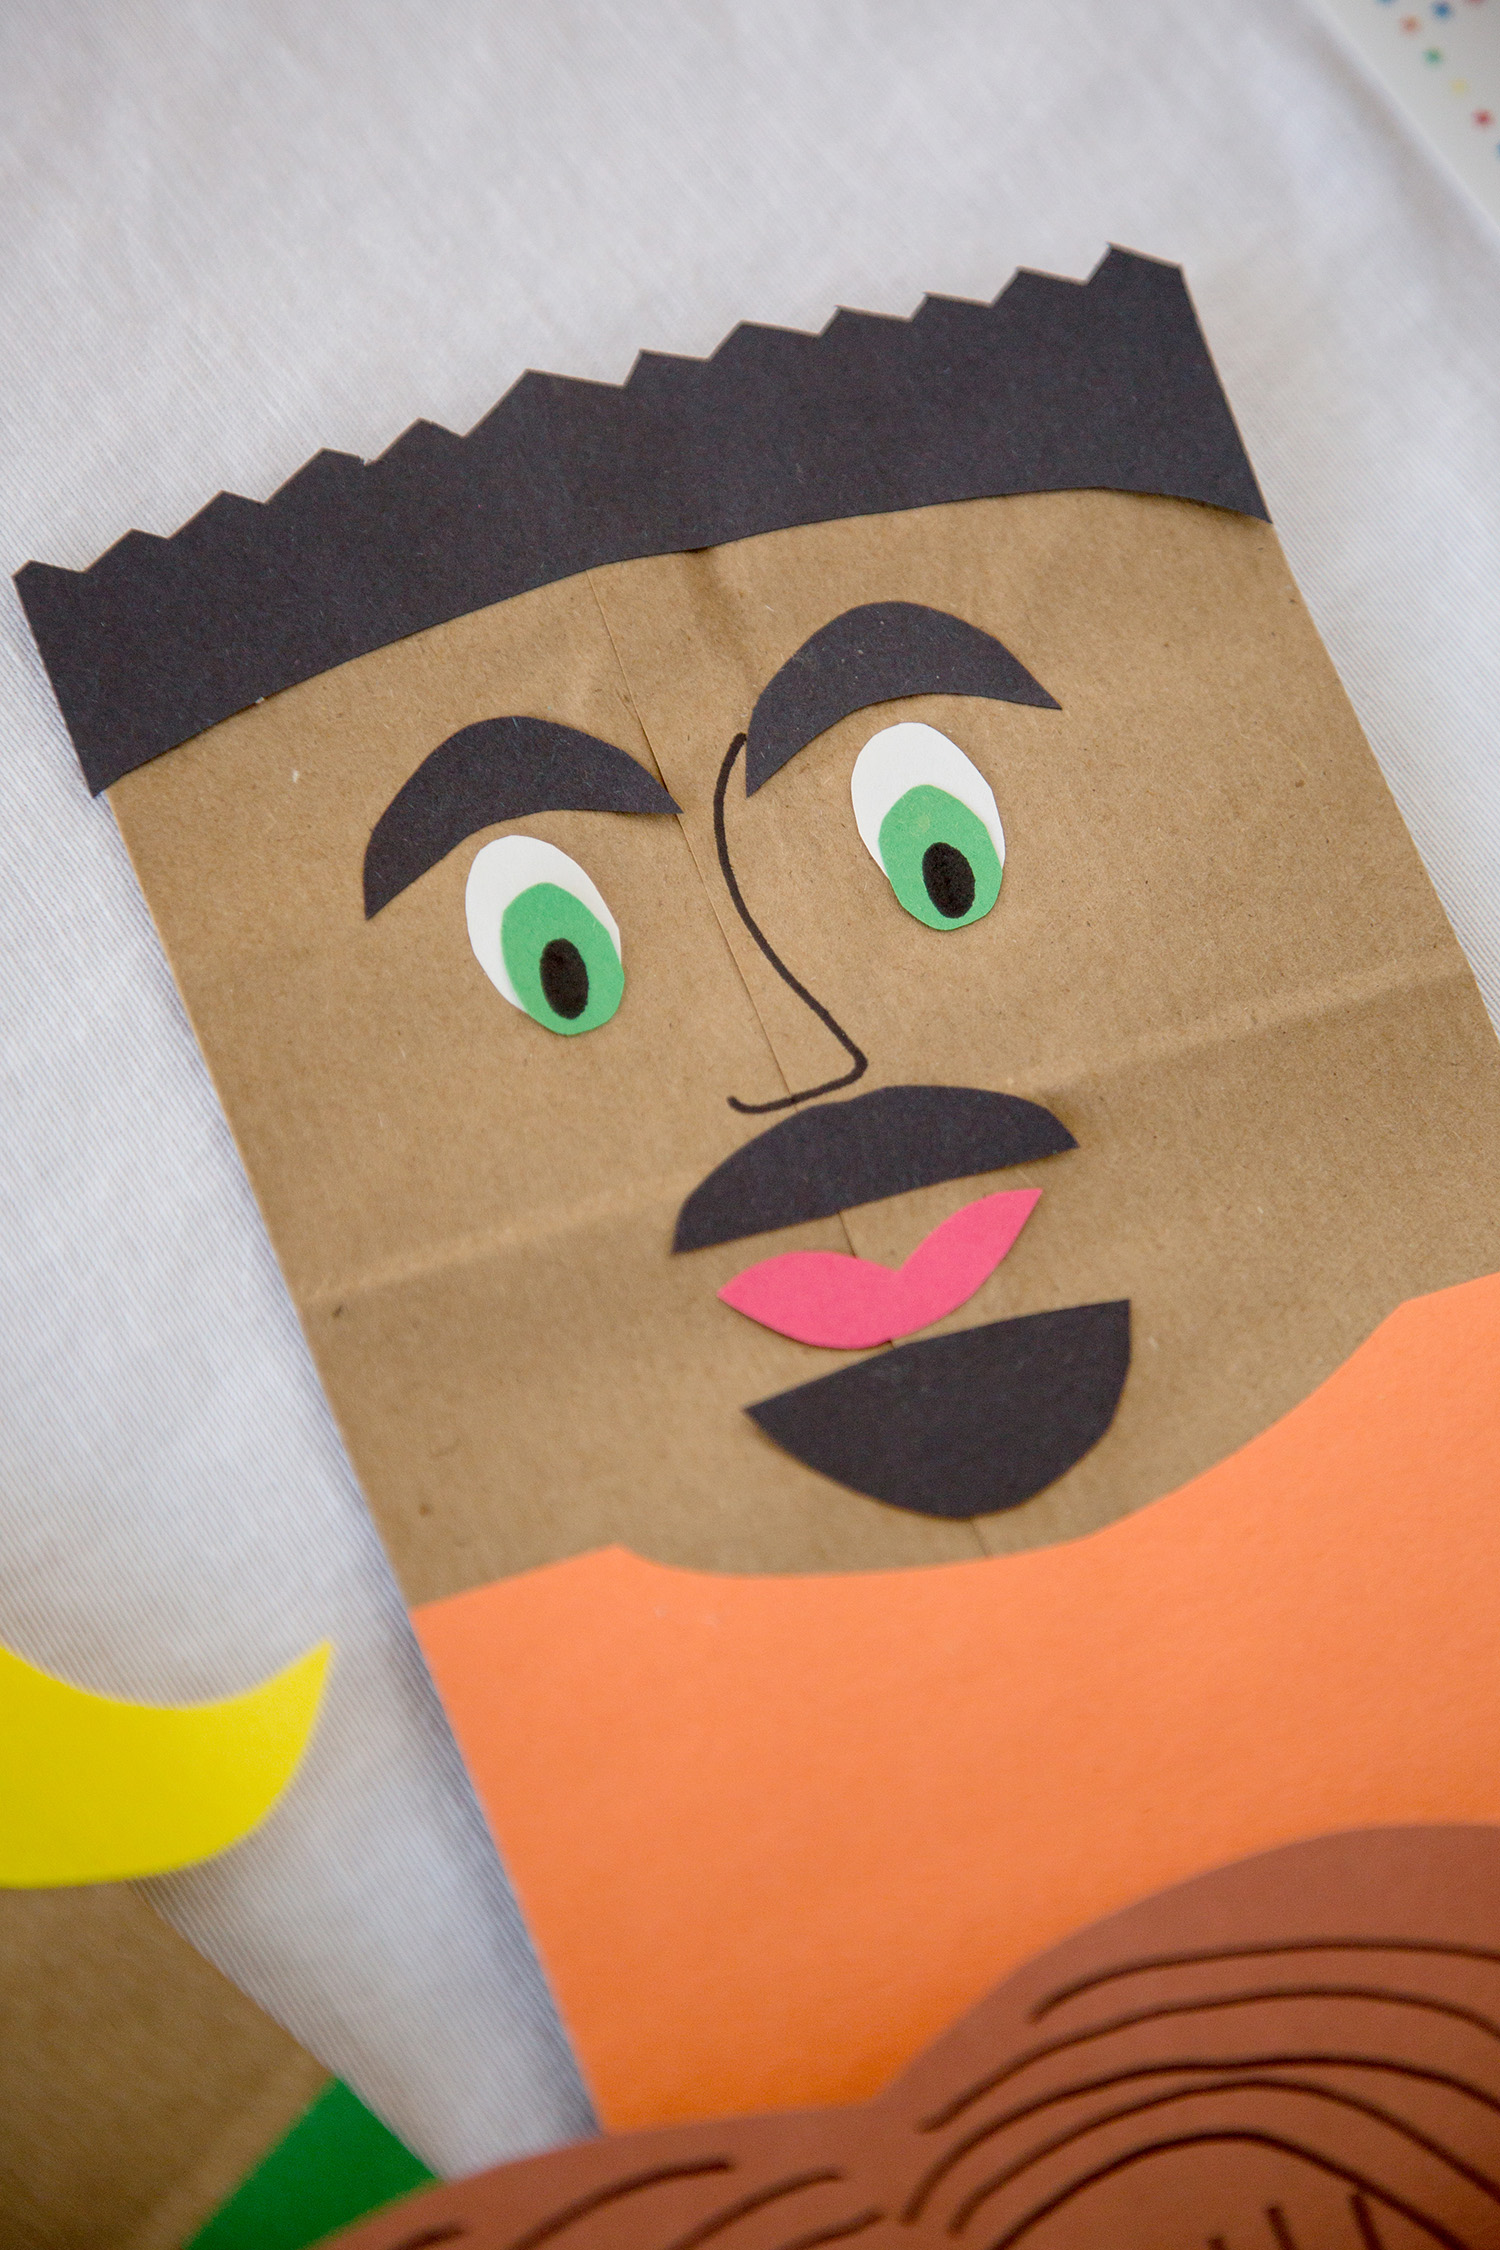 DIY Paper Bag Puppets - Playfully